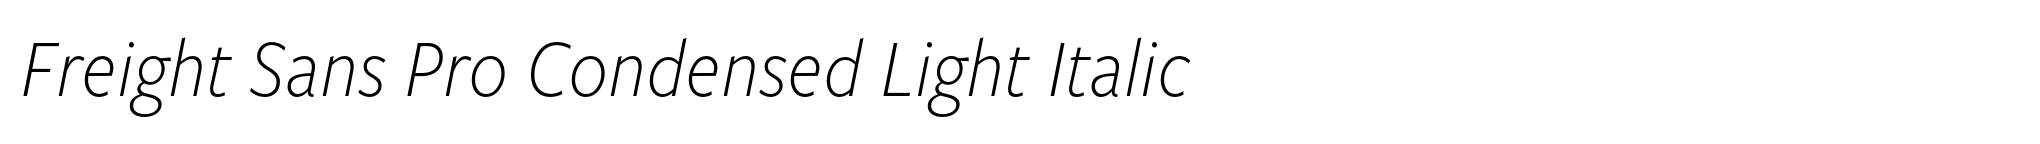 Freight Sans Pro Condensed Light Italic image